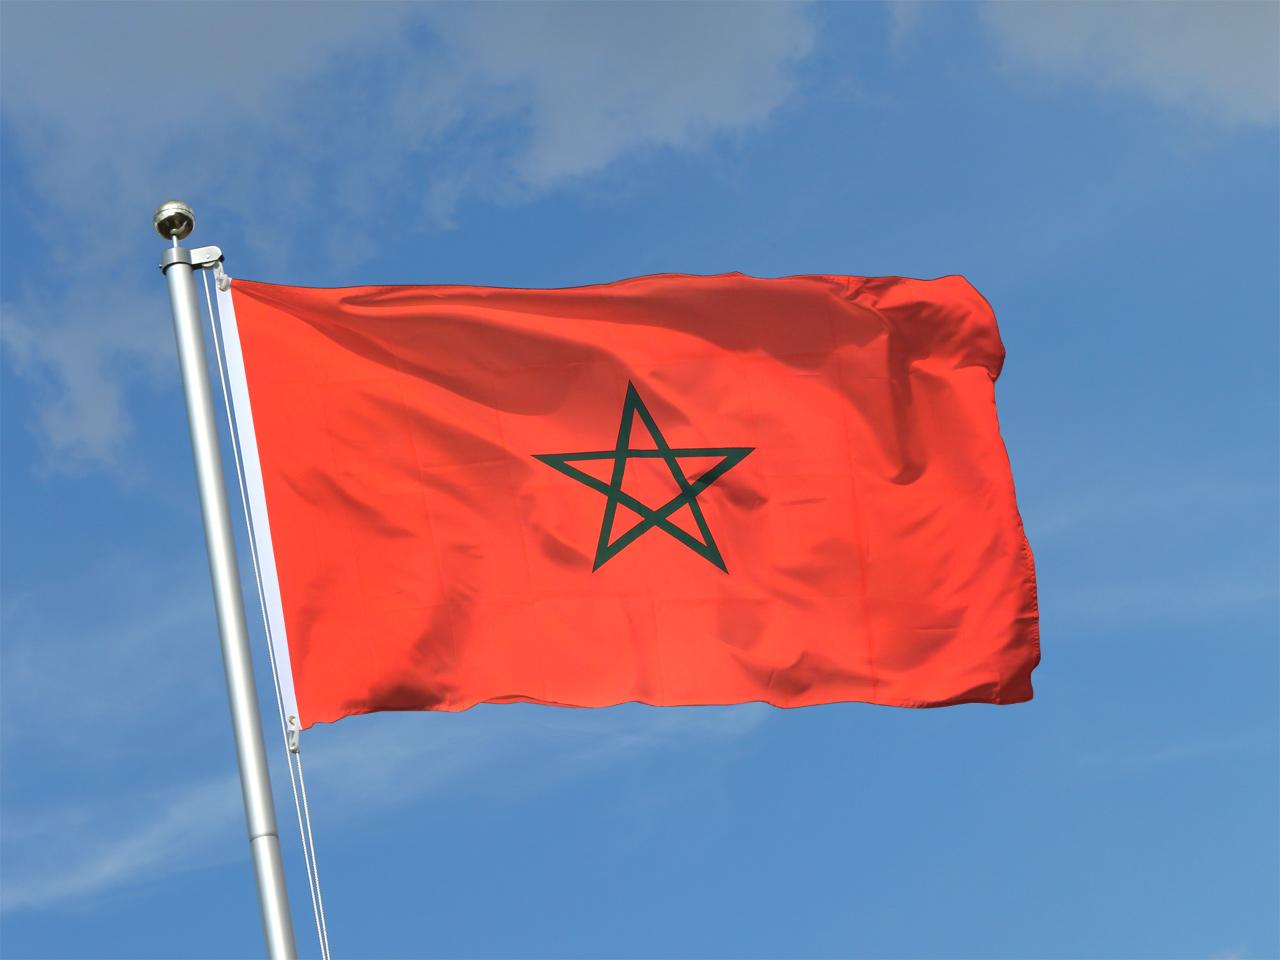  Marruecos, un modelo a seguir en materia de transición energética (medio italiano)